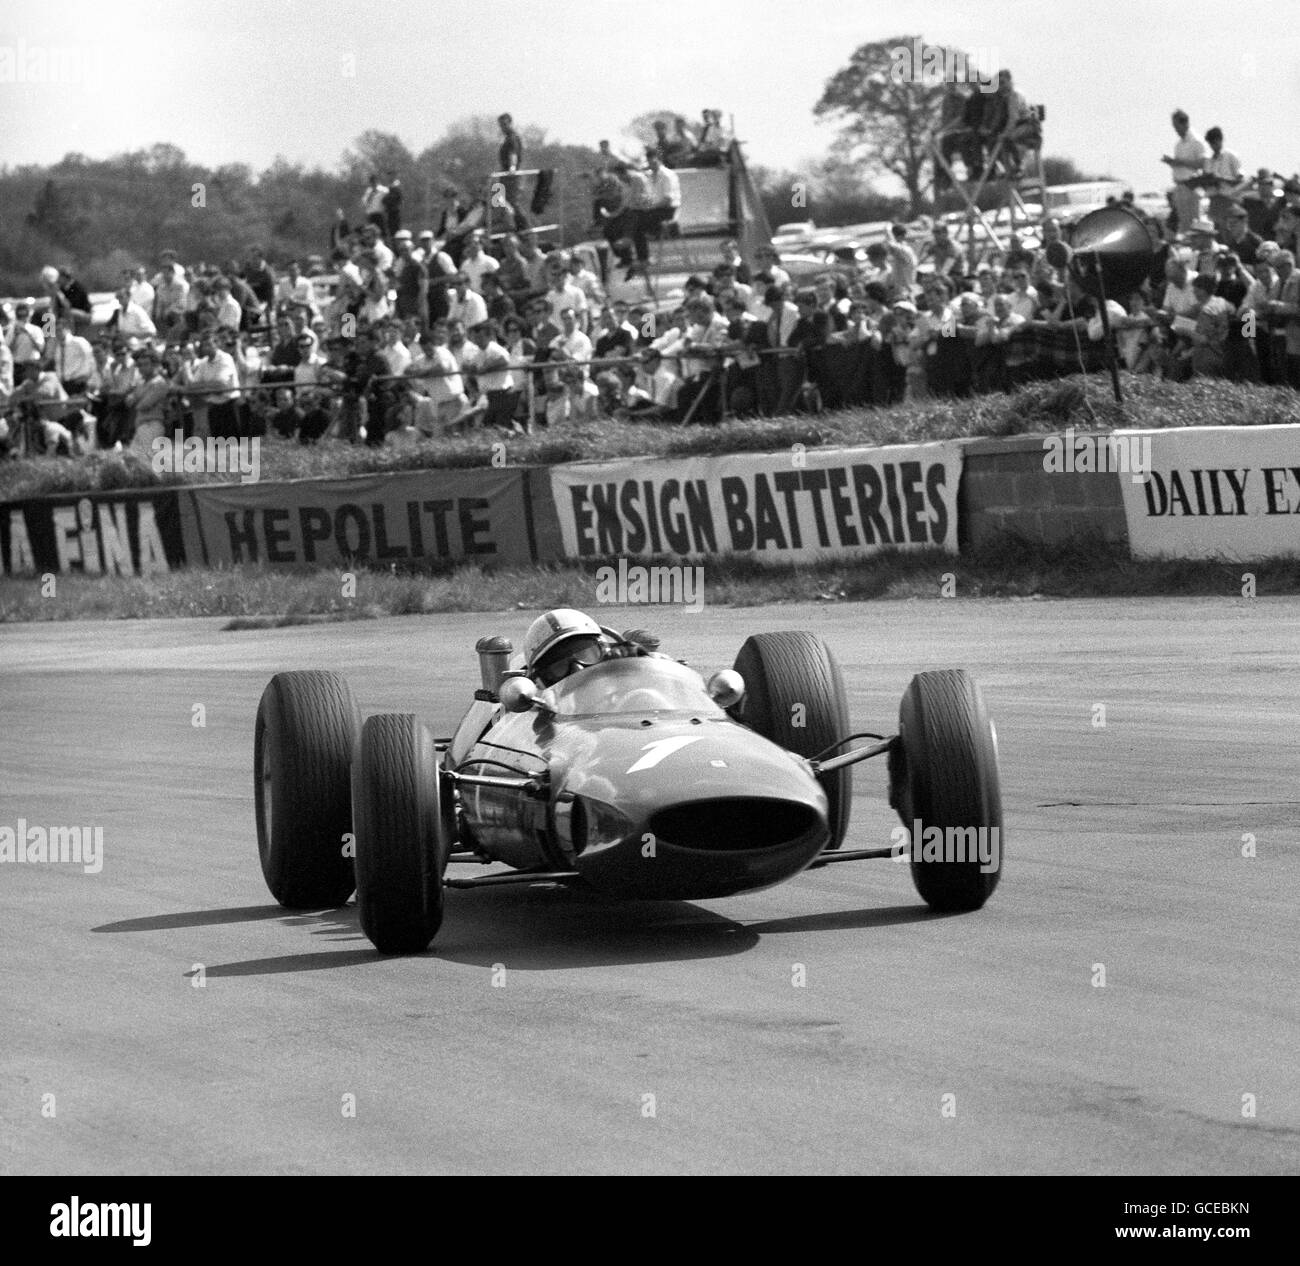 Motorsport - Daily Express Trophy - Silverstone. John Surtees, Ferrari 158 Stockfoto